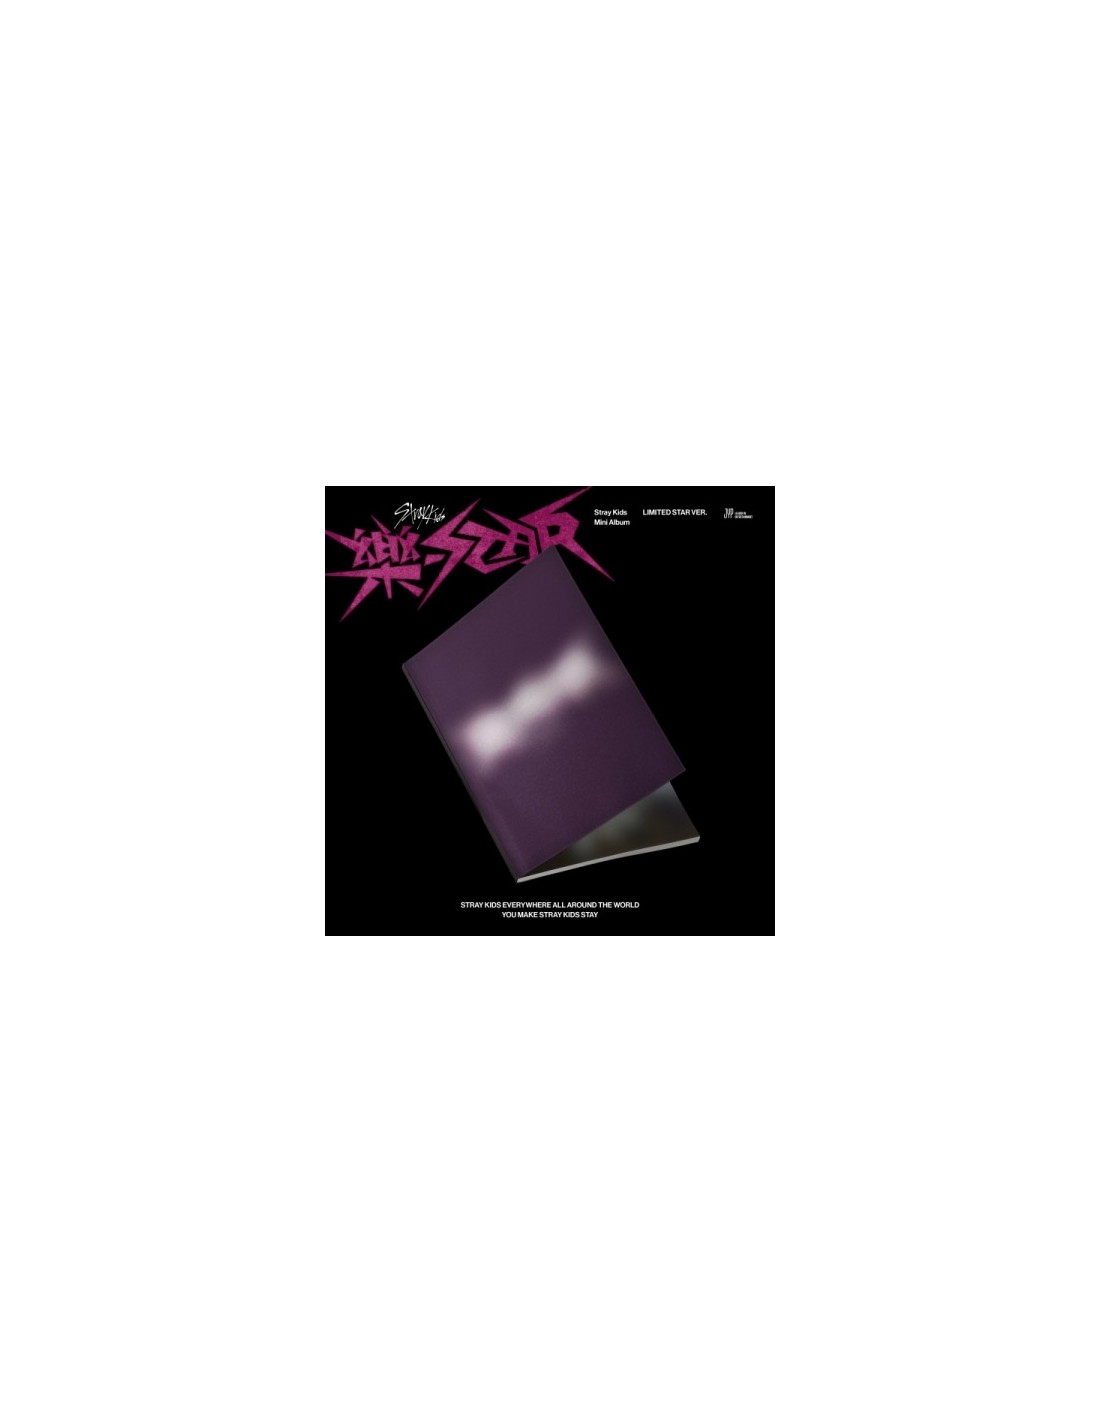 Limited] Stray Kids Mini Album - 樂-STAR (Limited Star Ver.) CD